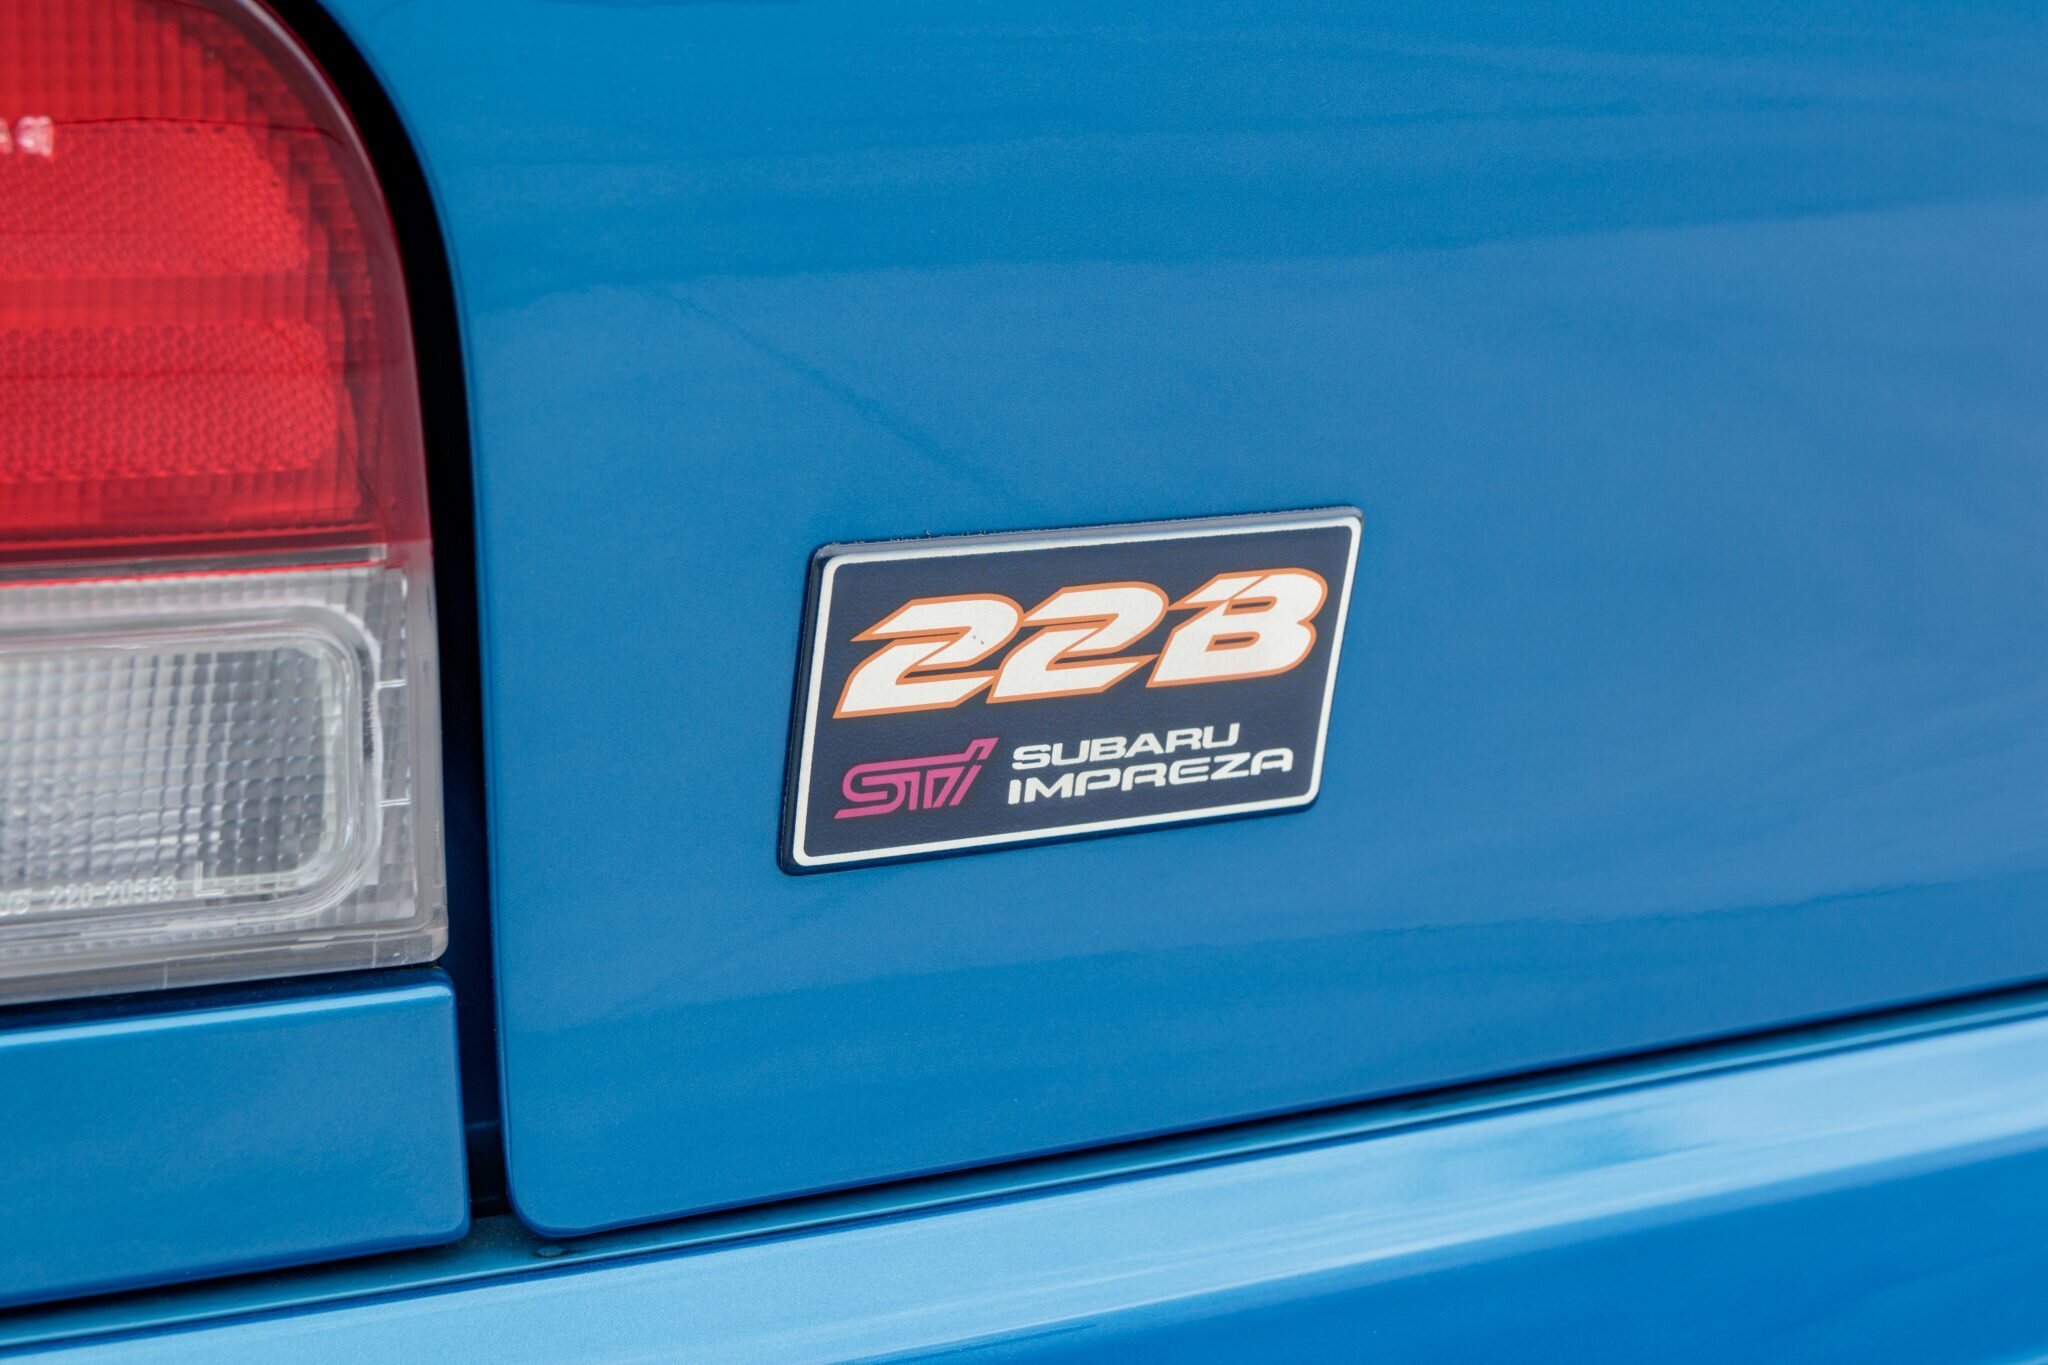 Subaru Impreza STi 1998 года купили за $312 000